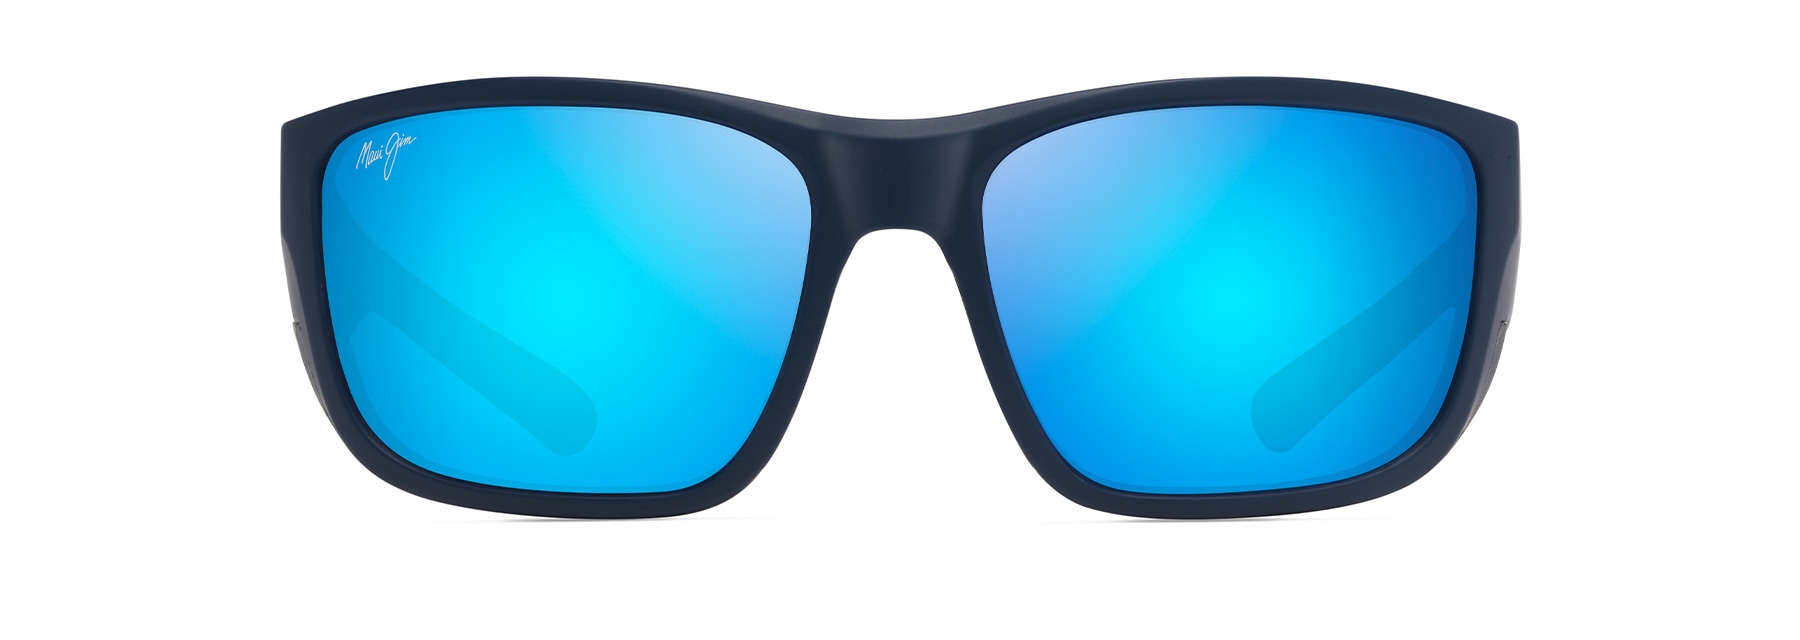 Amberjack Polarized Sunglasses | Maui Jim®